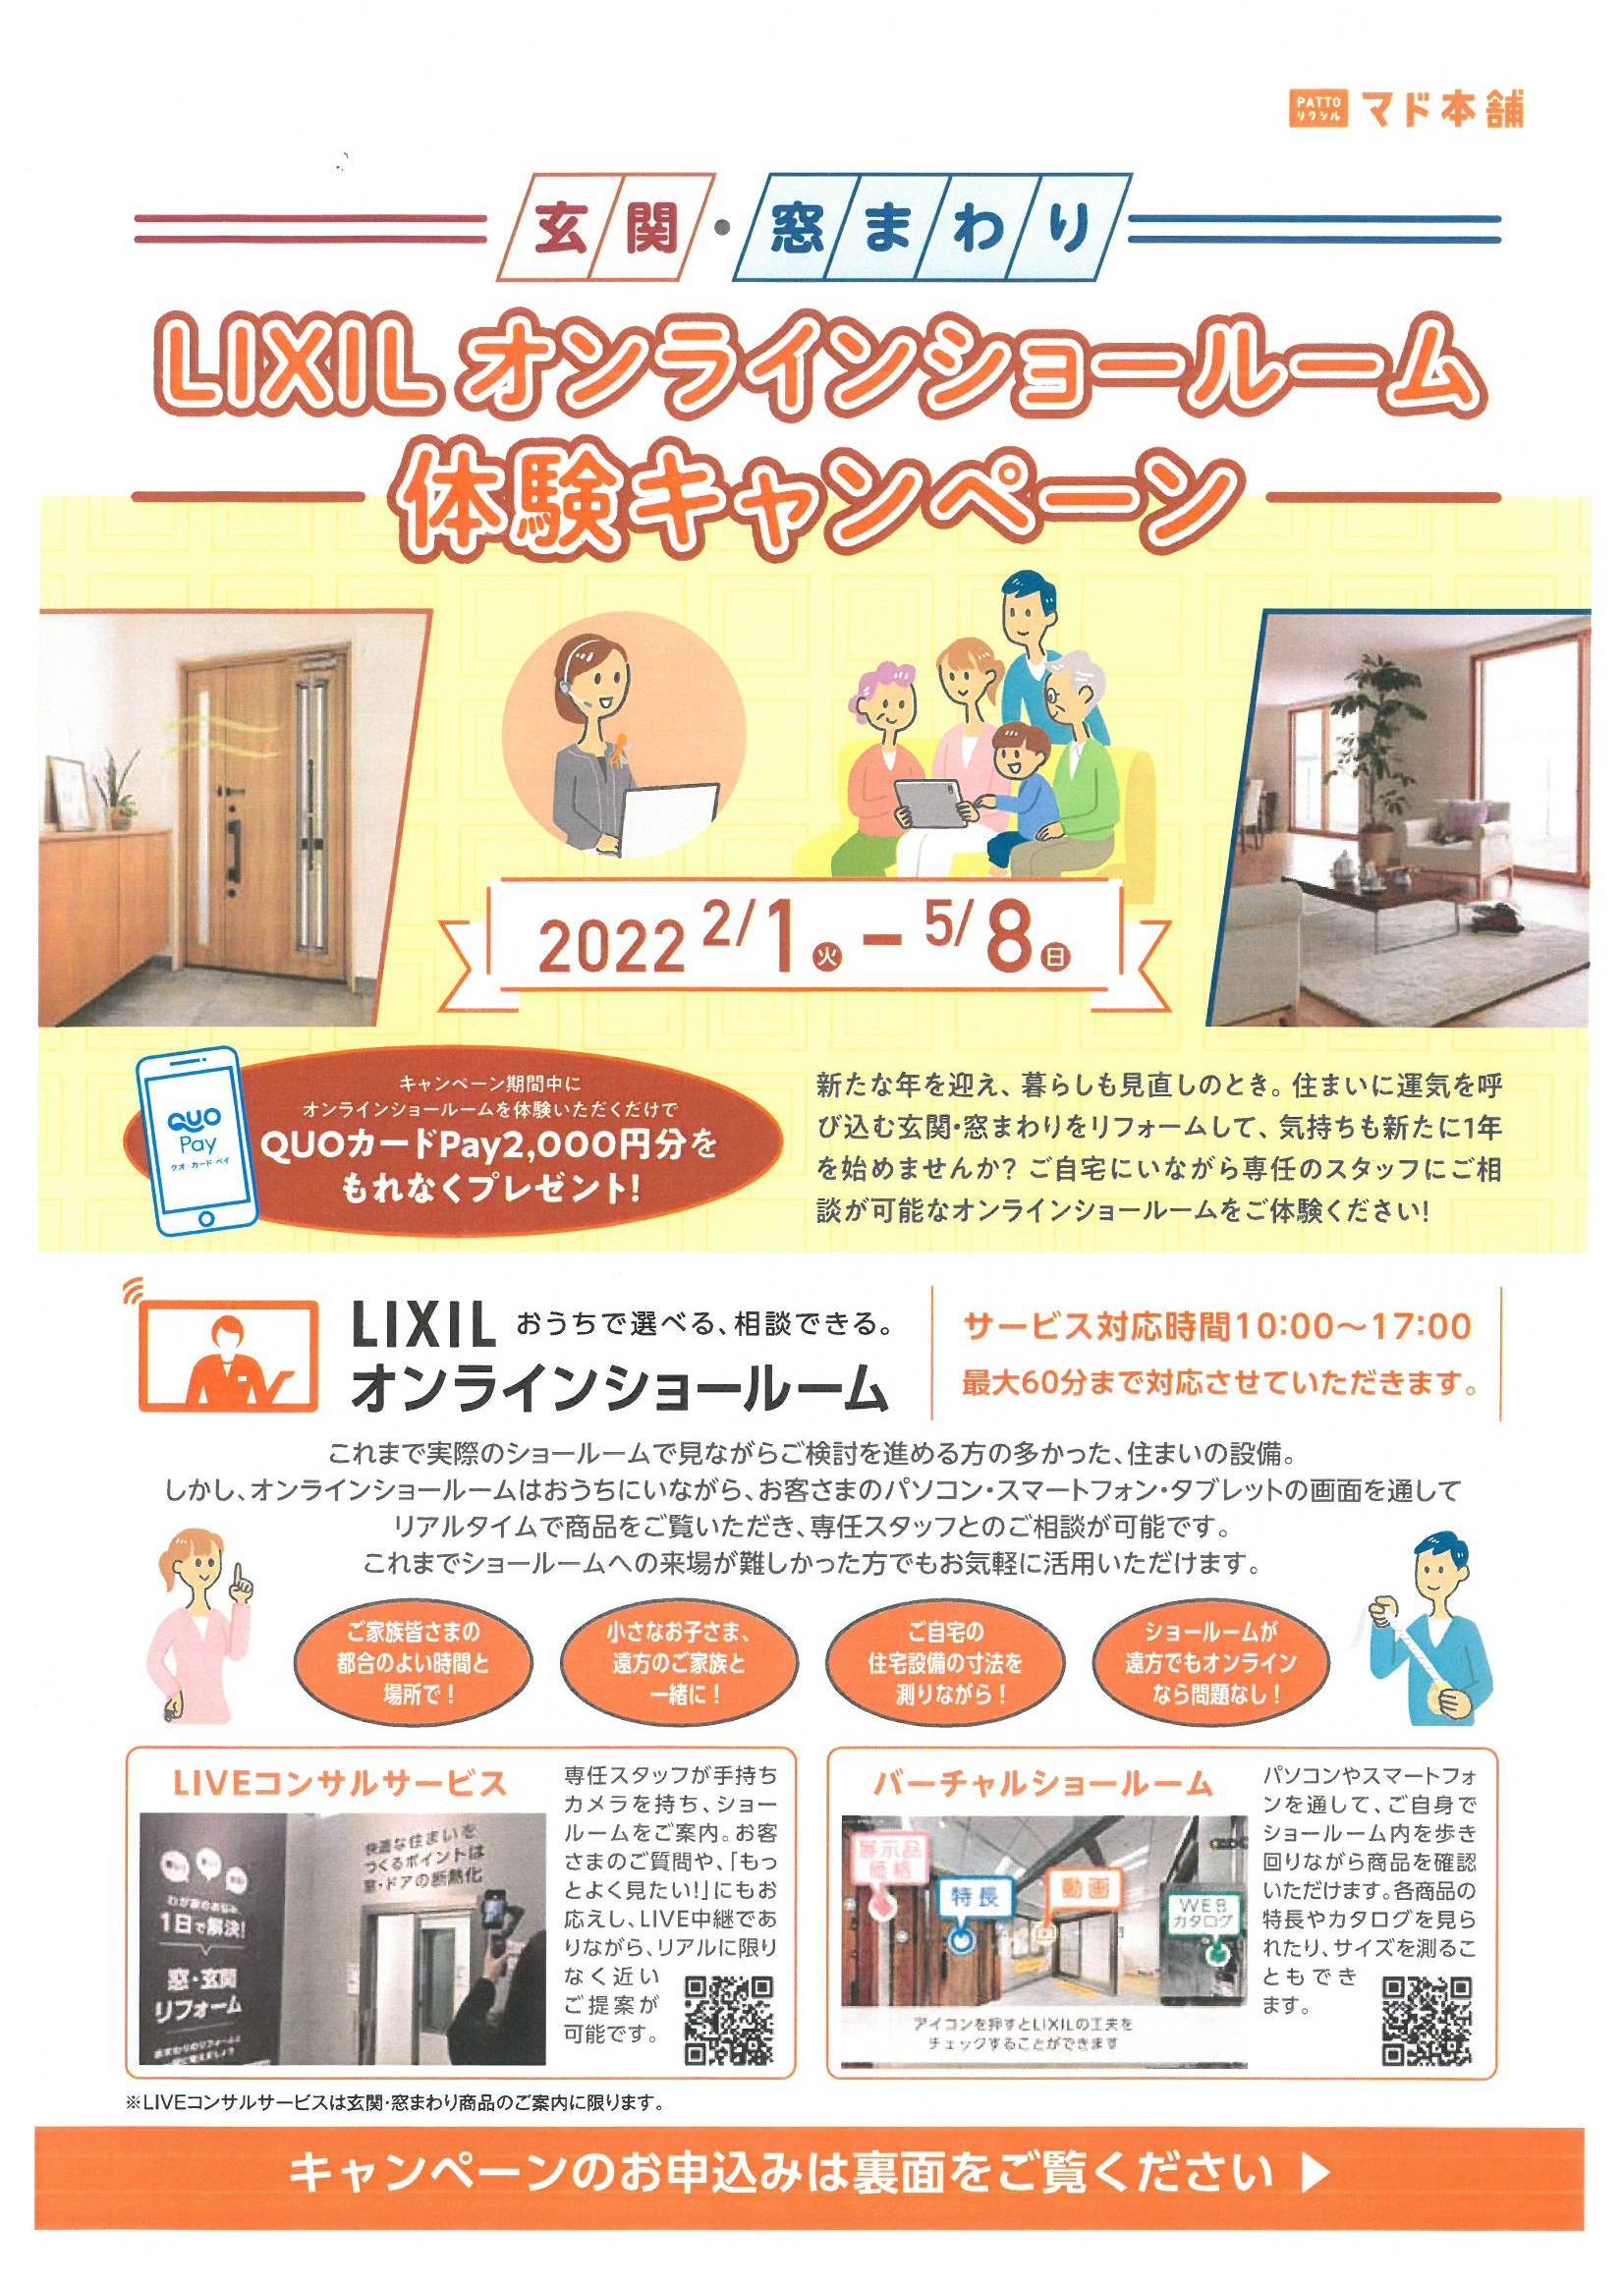 LIXIL　オンラインショールーム体験キャンペーン 鎌田トーヨー住器のイベントキャンペーン 写真1